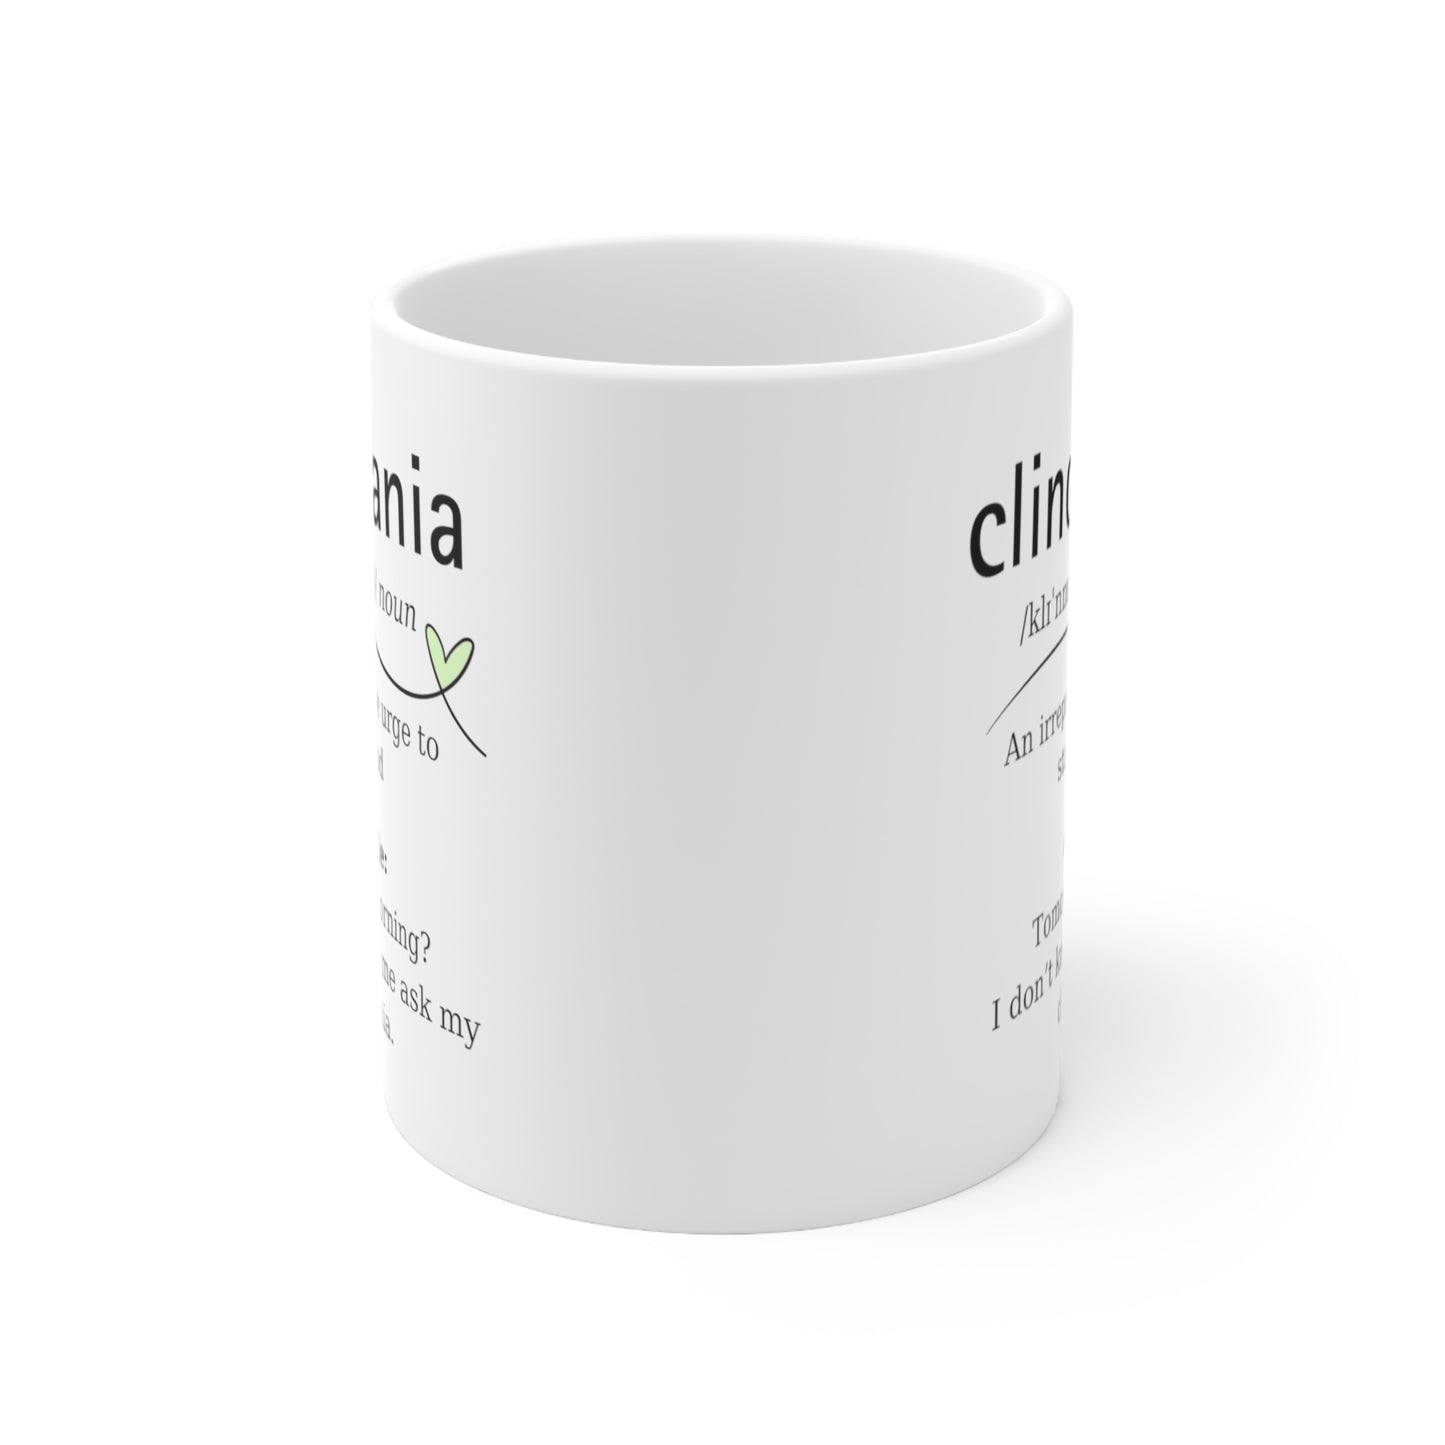 Clinomania Meaning - ADHD Dictionary Definition Mug - Fidget and Focus